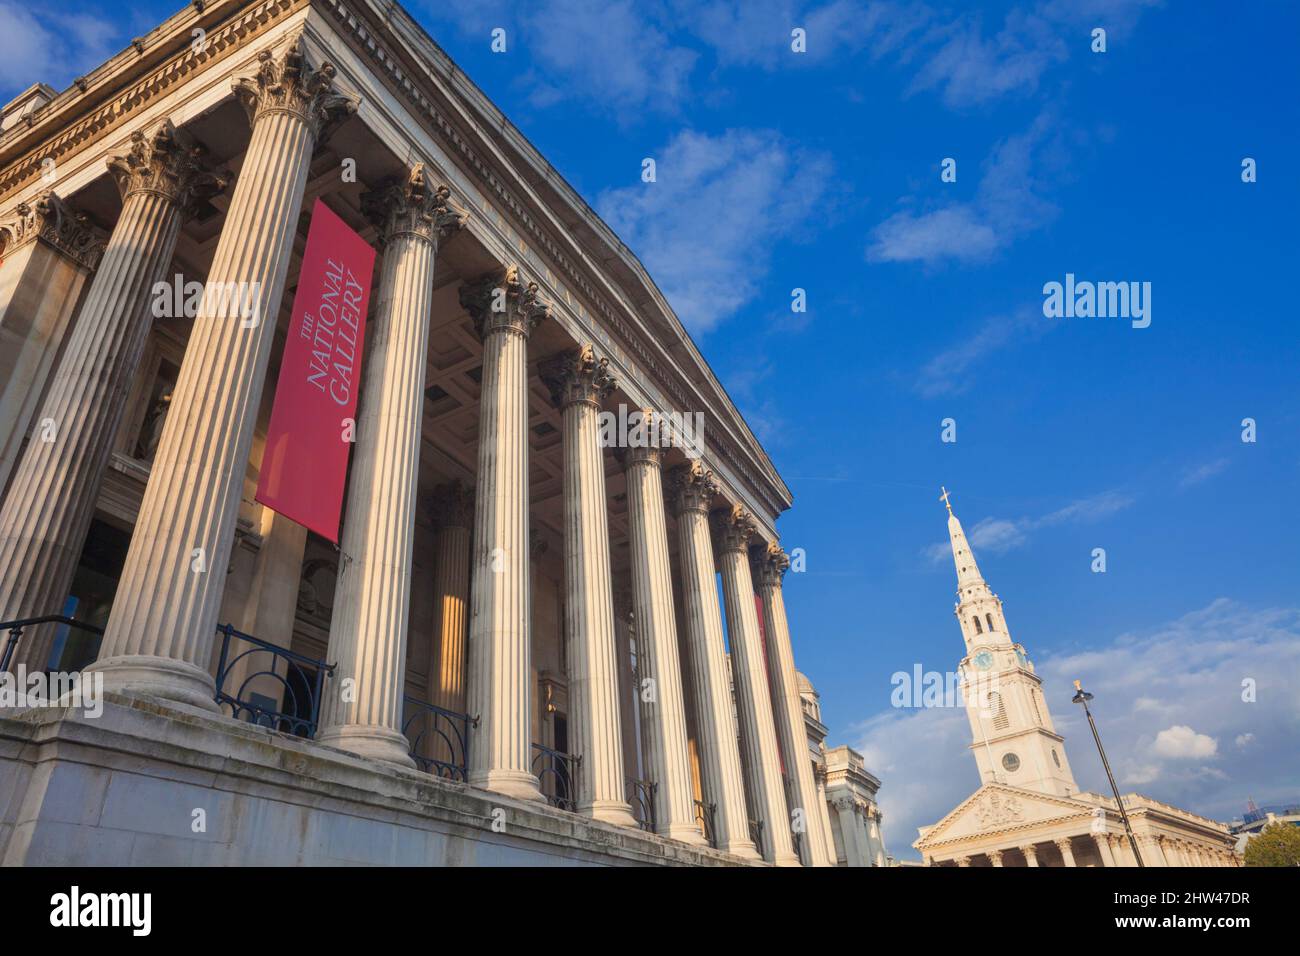 National Gallery, Trafalgar Square, London, England, UK Banque D'Images